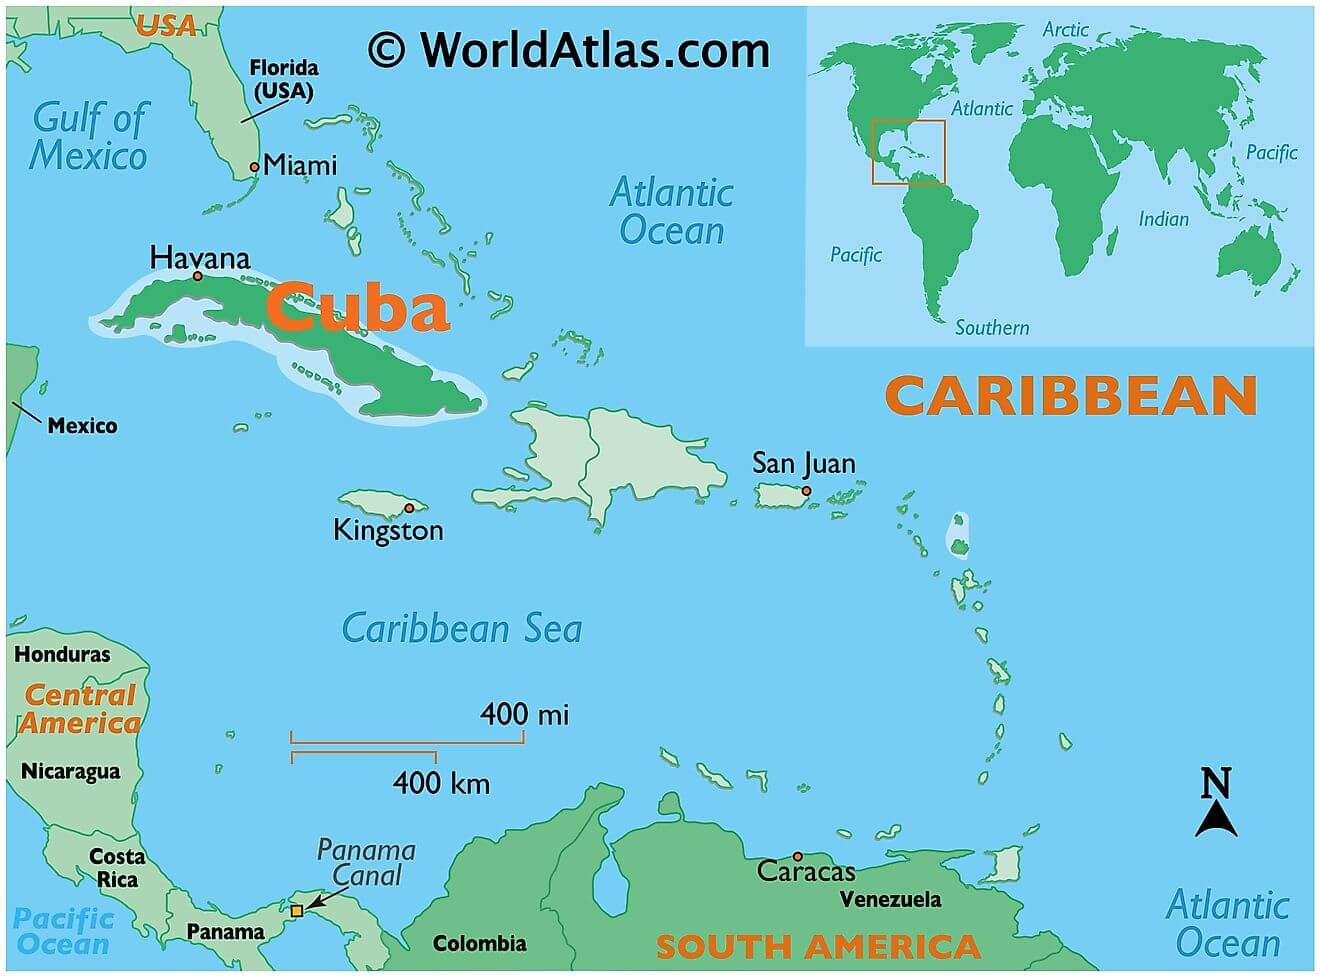 Cuba ở đâu?